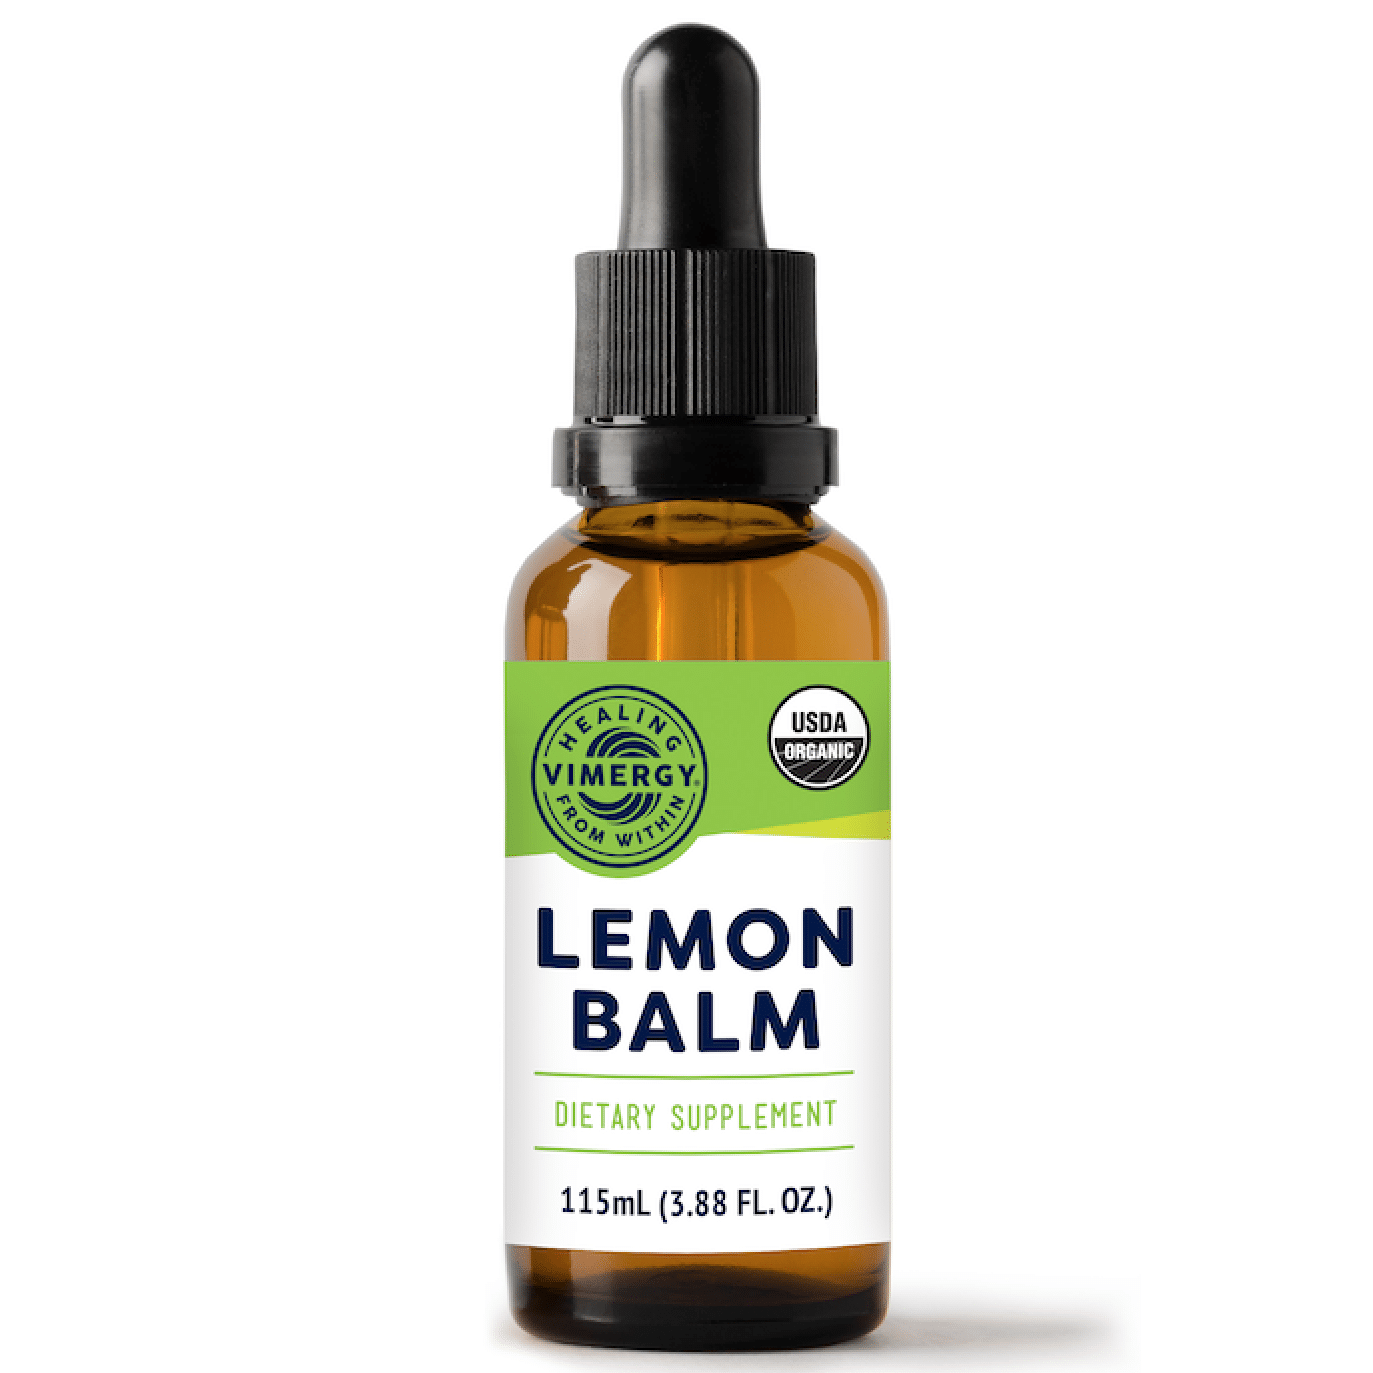 Lemon Balm - Vimergy